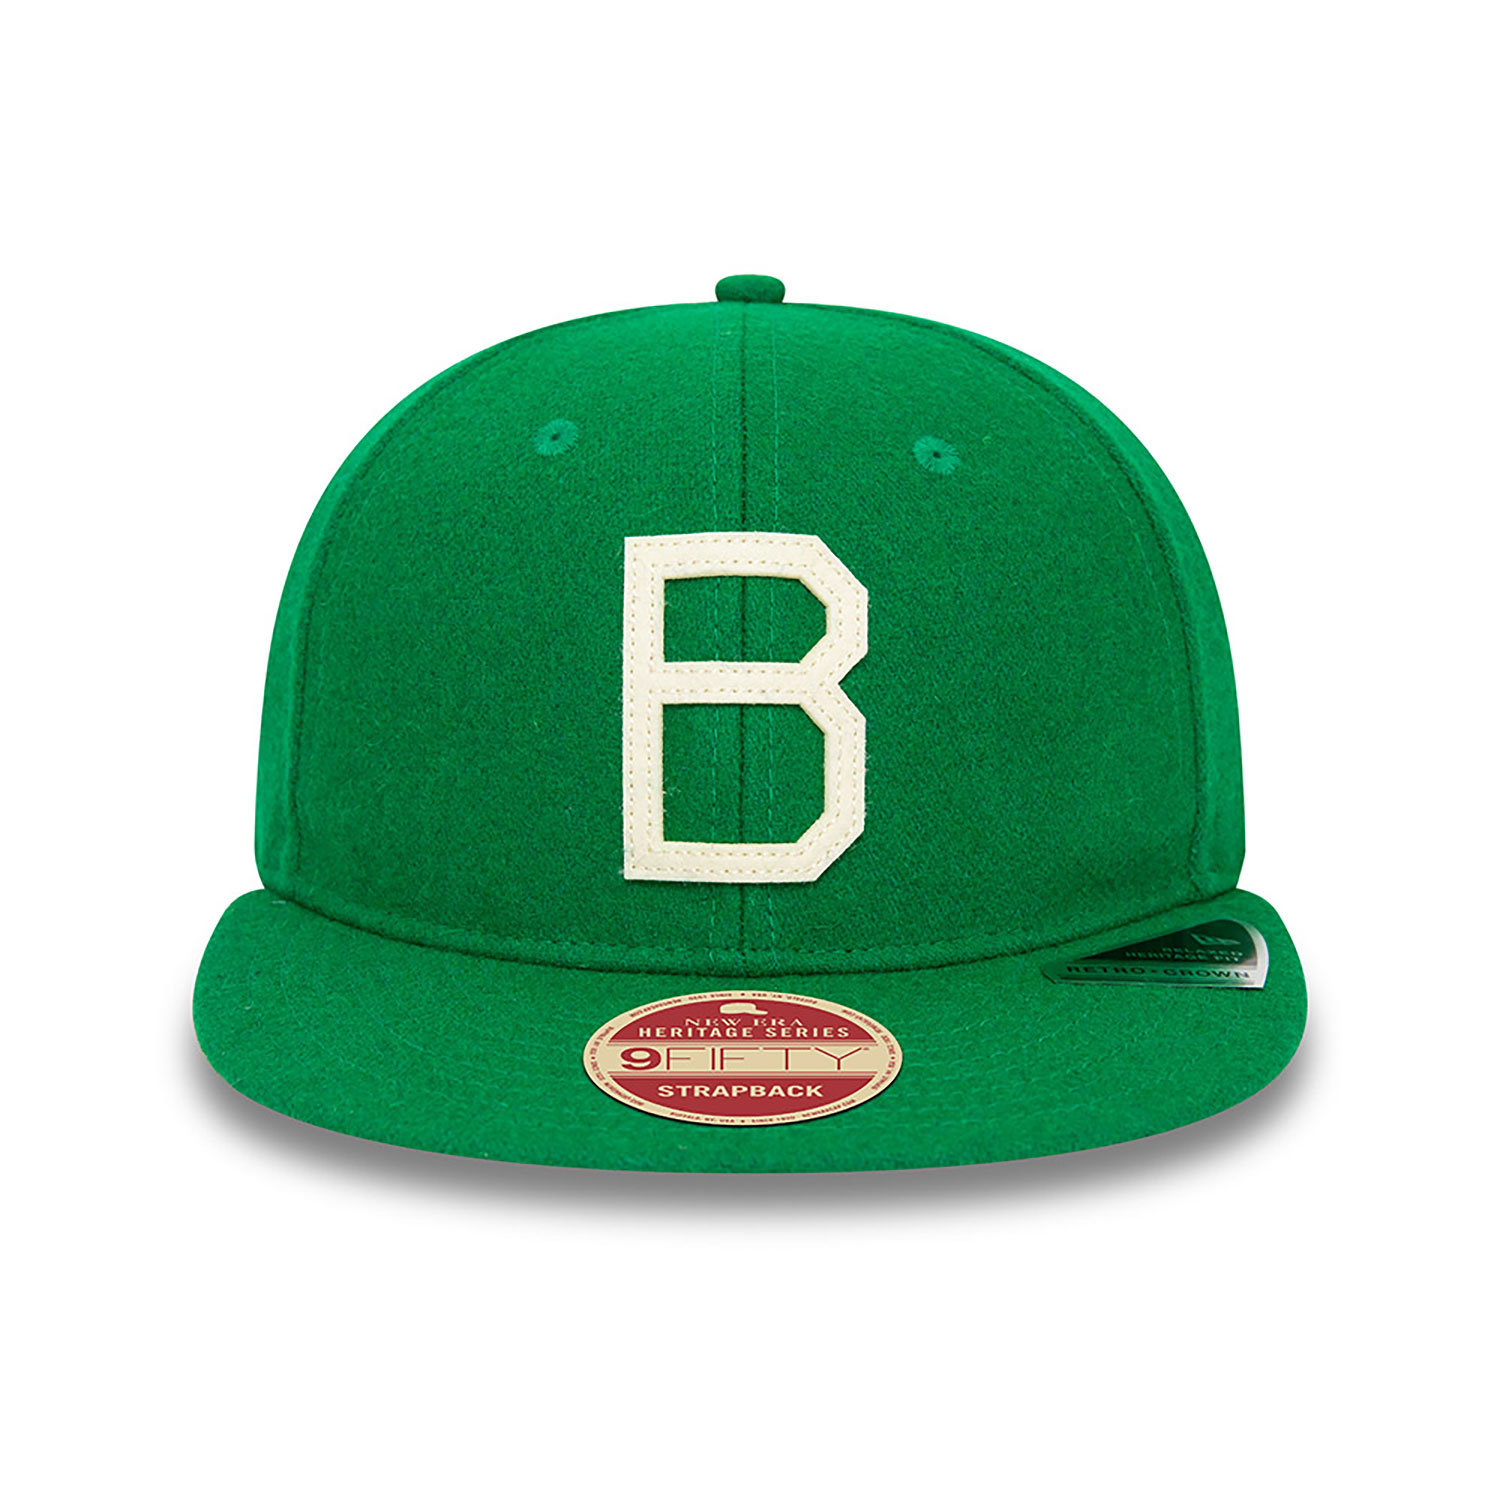 Brooklyn Dodgers Heritage Series Green Retro Crown 9FIFTY Strapback Cap